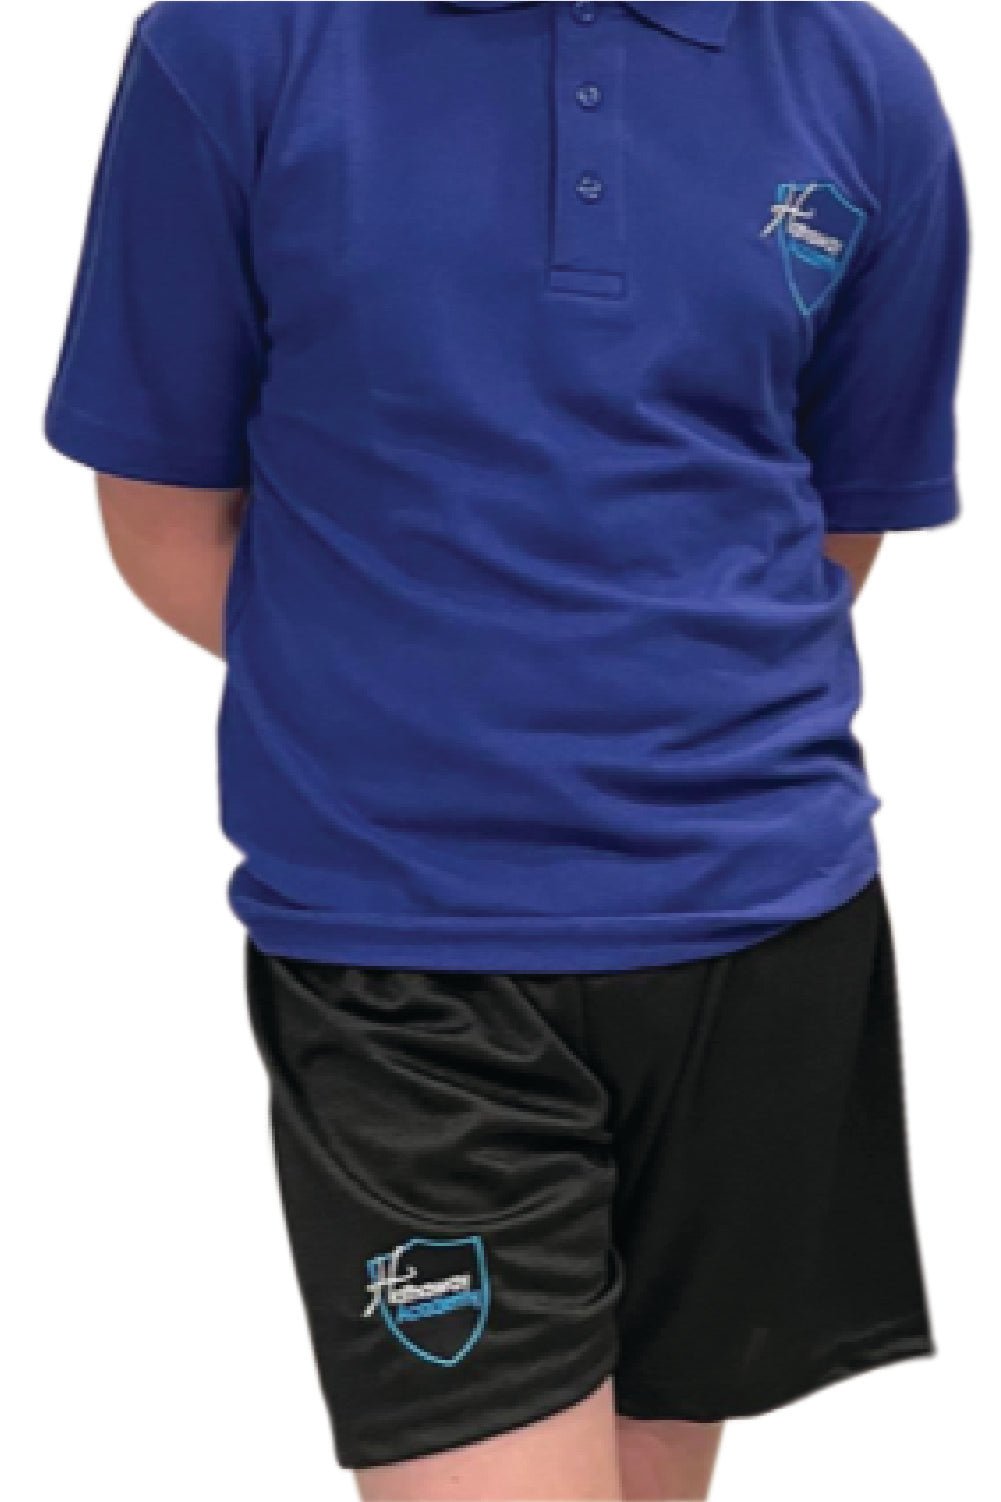 Hathaway Academy PE Shorts - Uniformwise Schoolwear